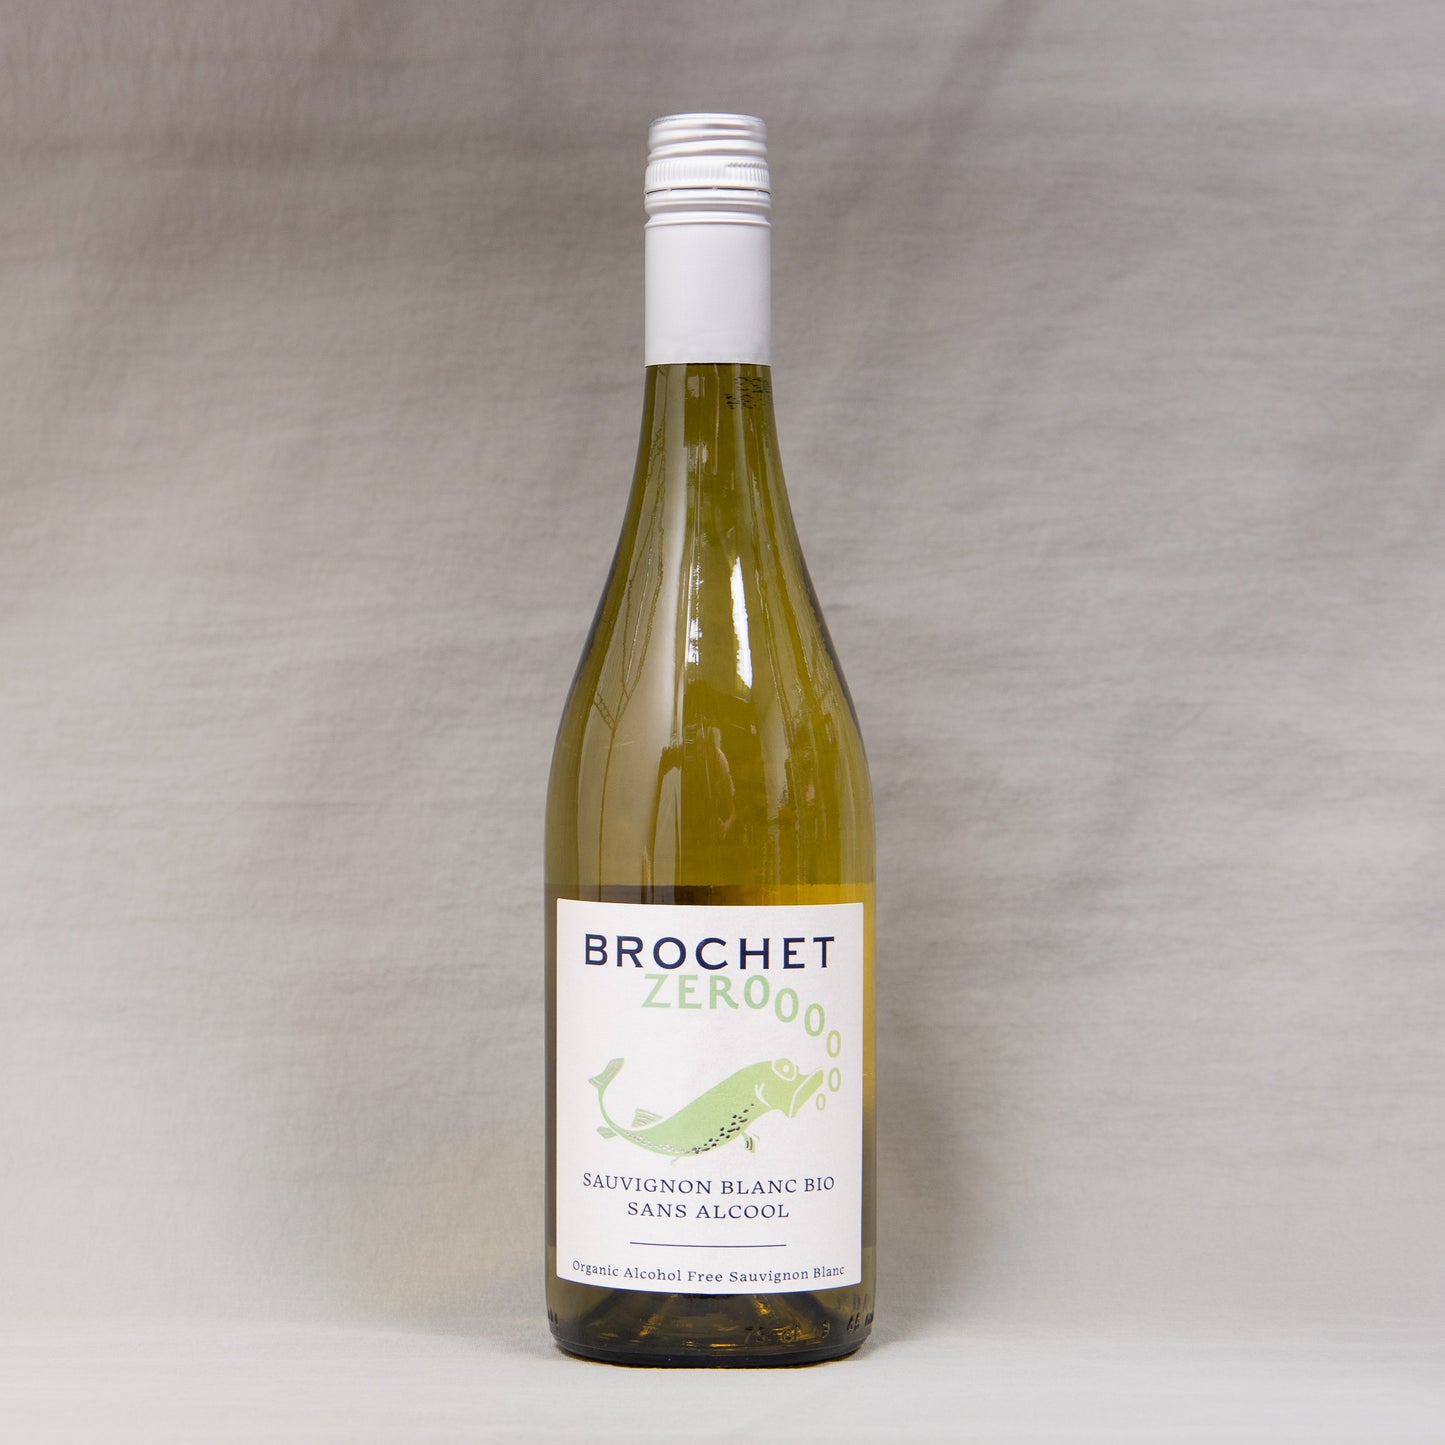 Brochet Zero Organic Sauvignon Blanc